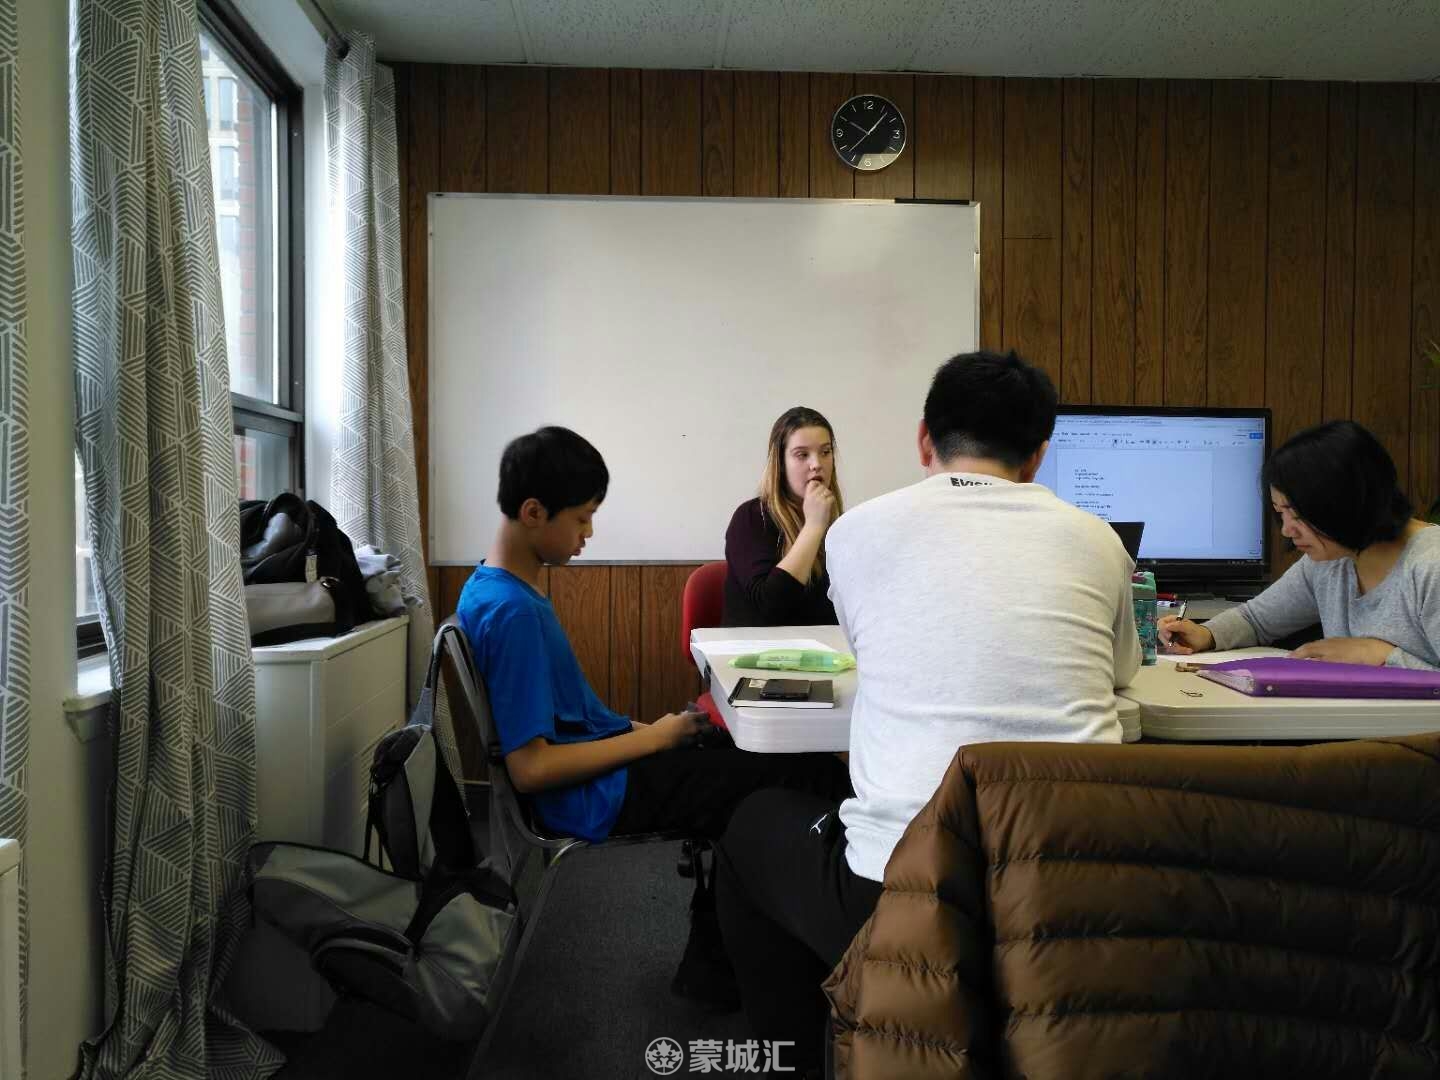 Icestar classroom tutor.jpg